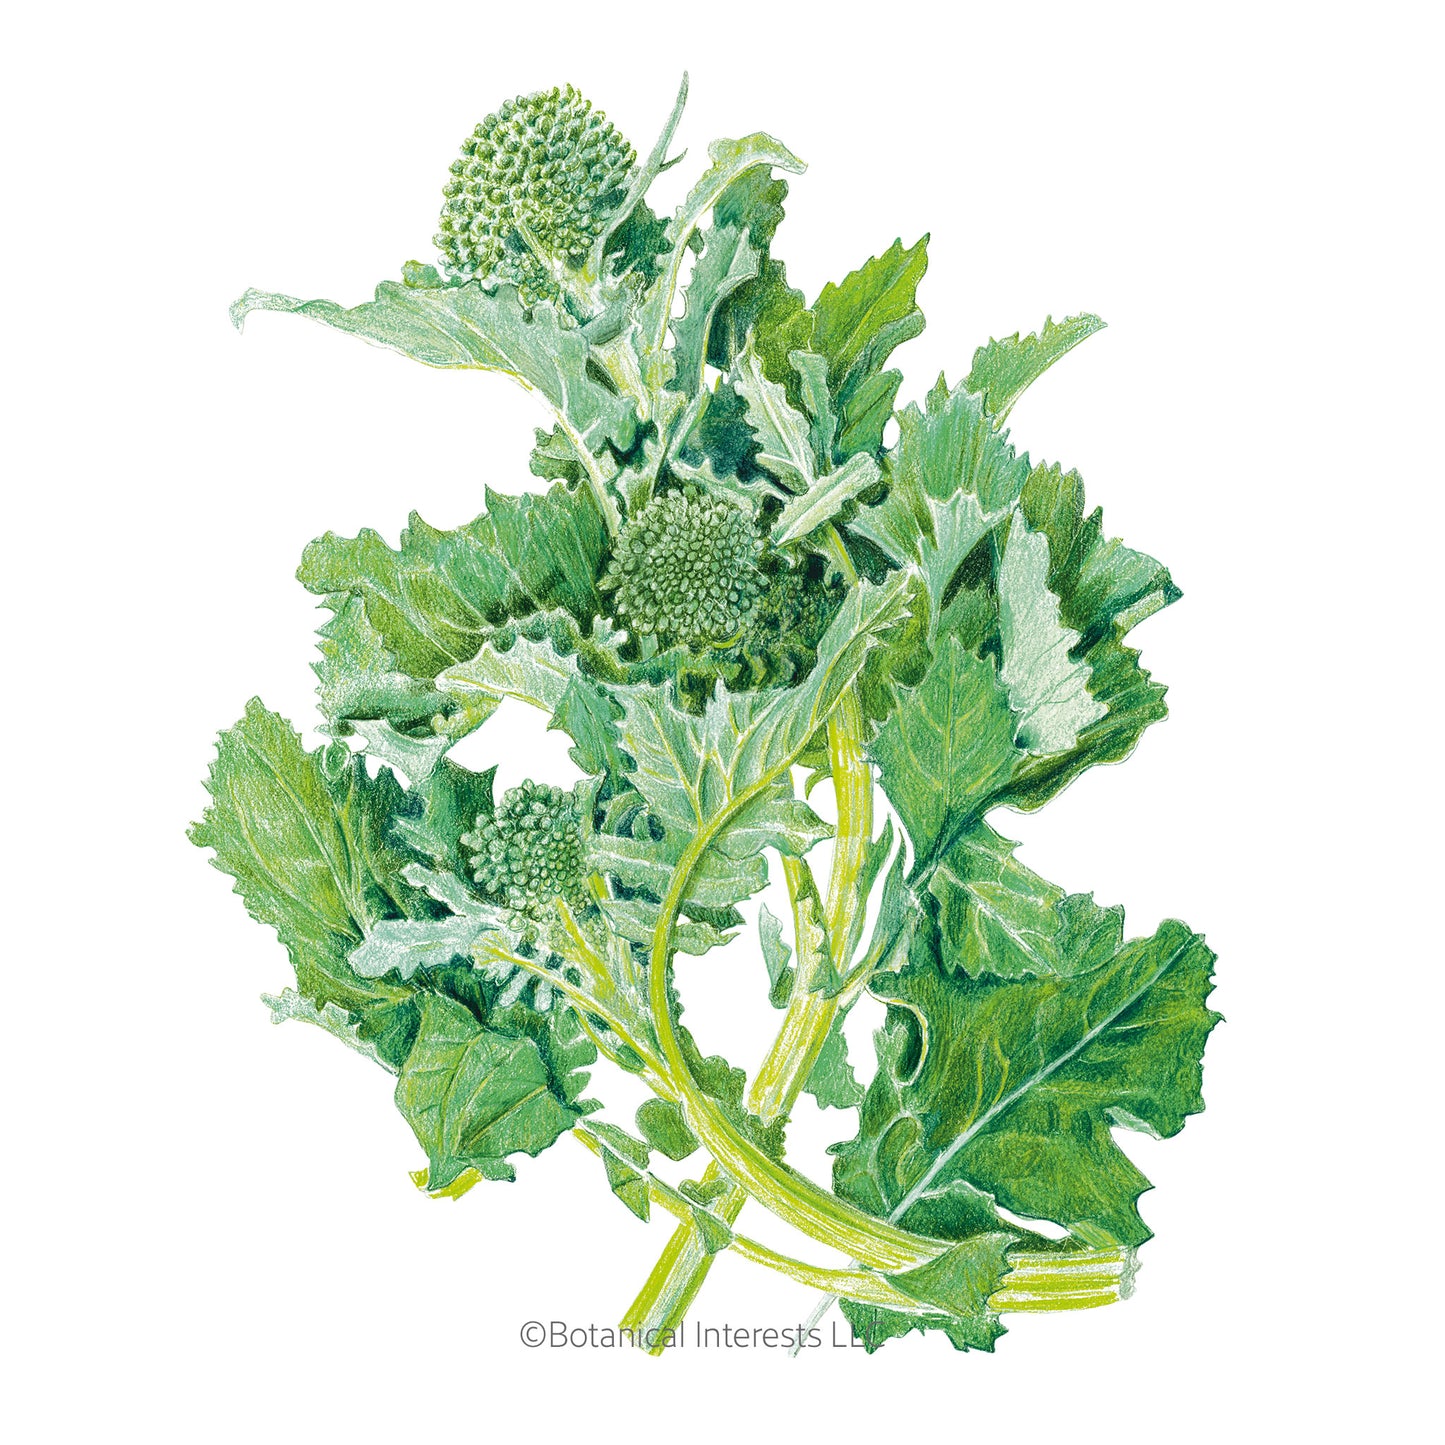 Rapini Broccoli Raab Seeds